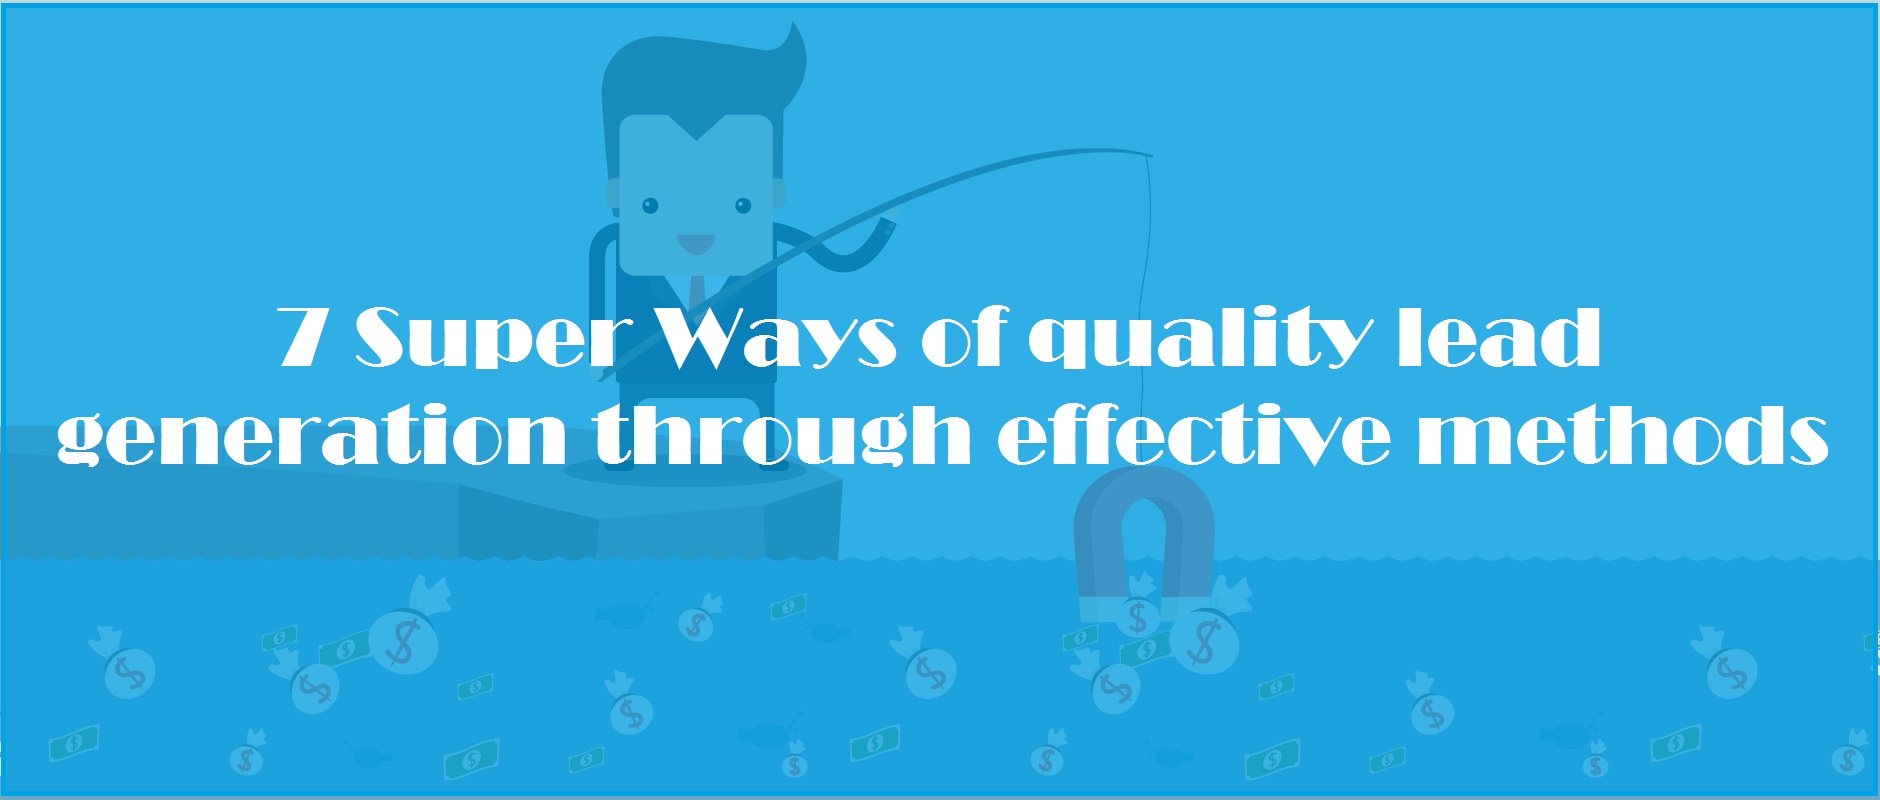 7 super ways of quality lead generation through effective methods